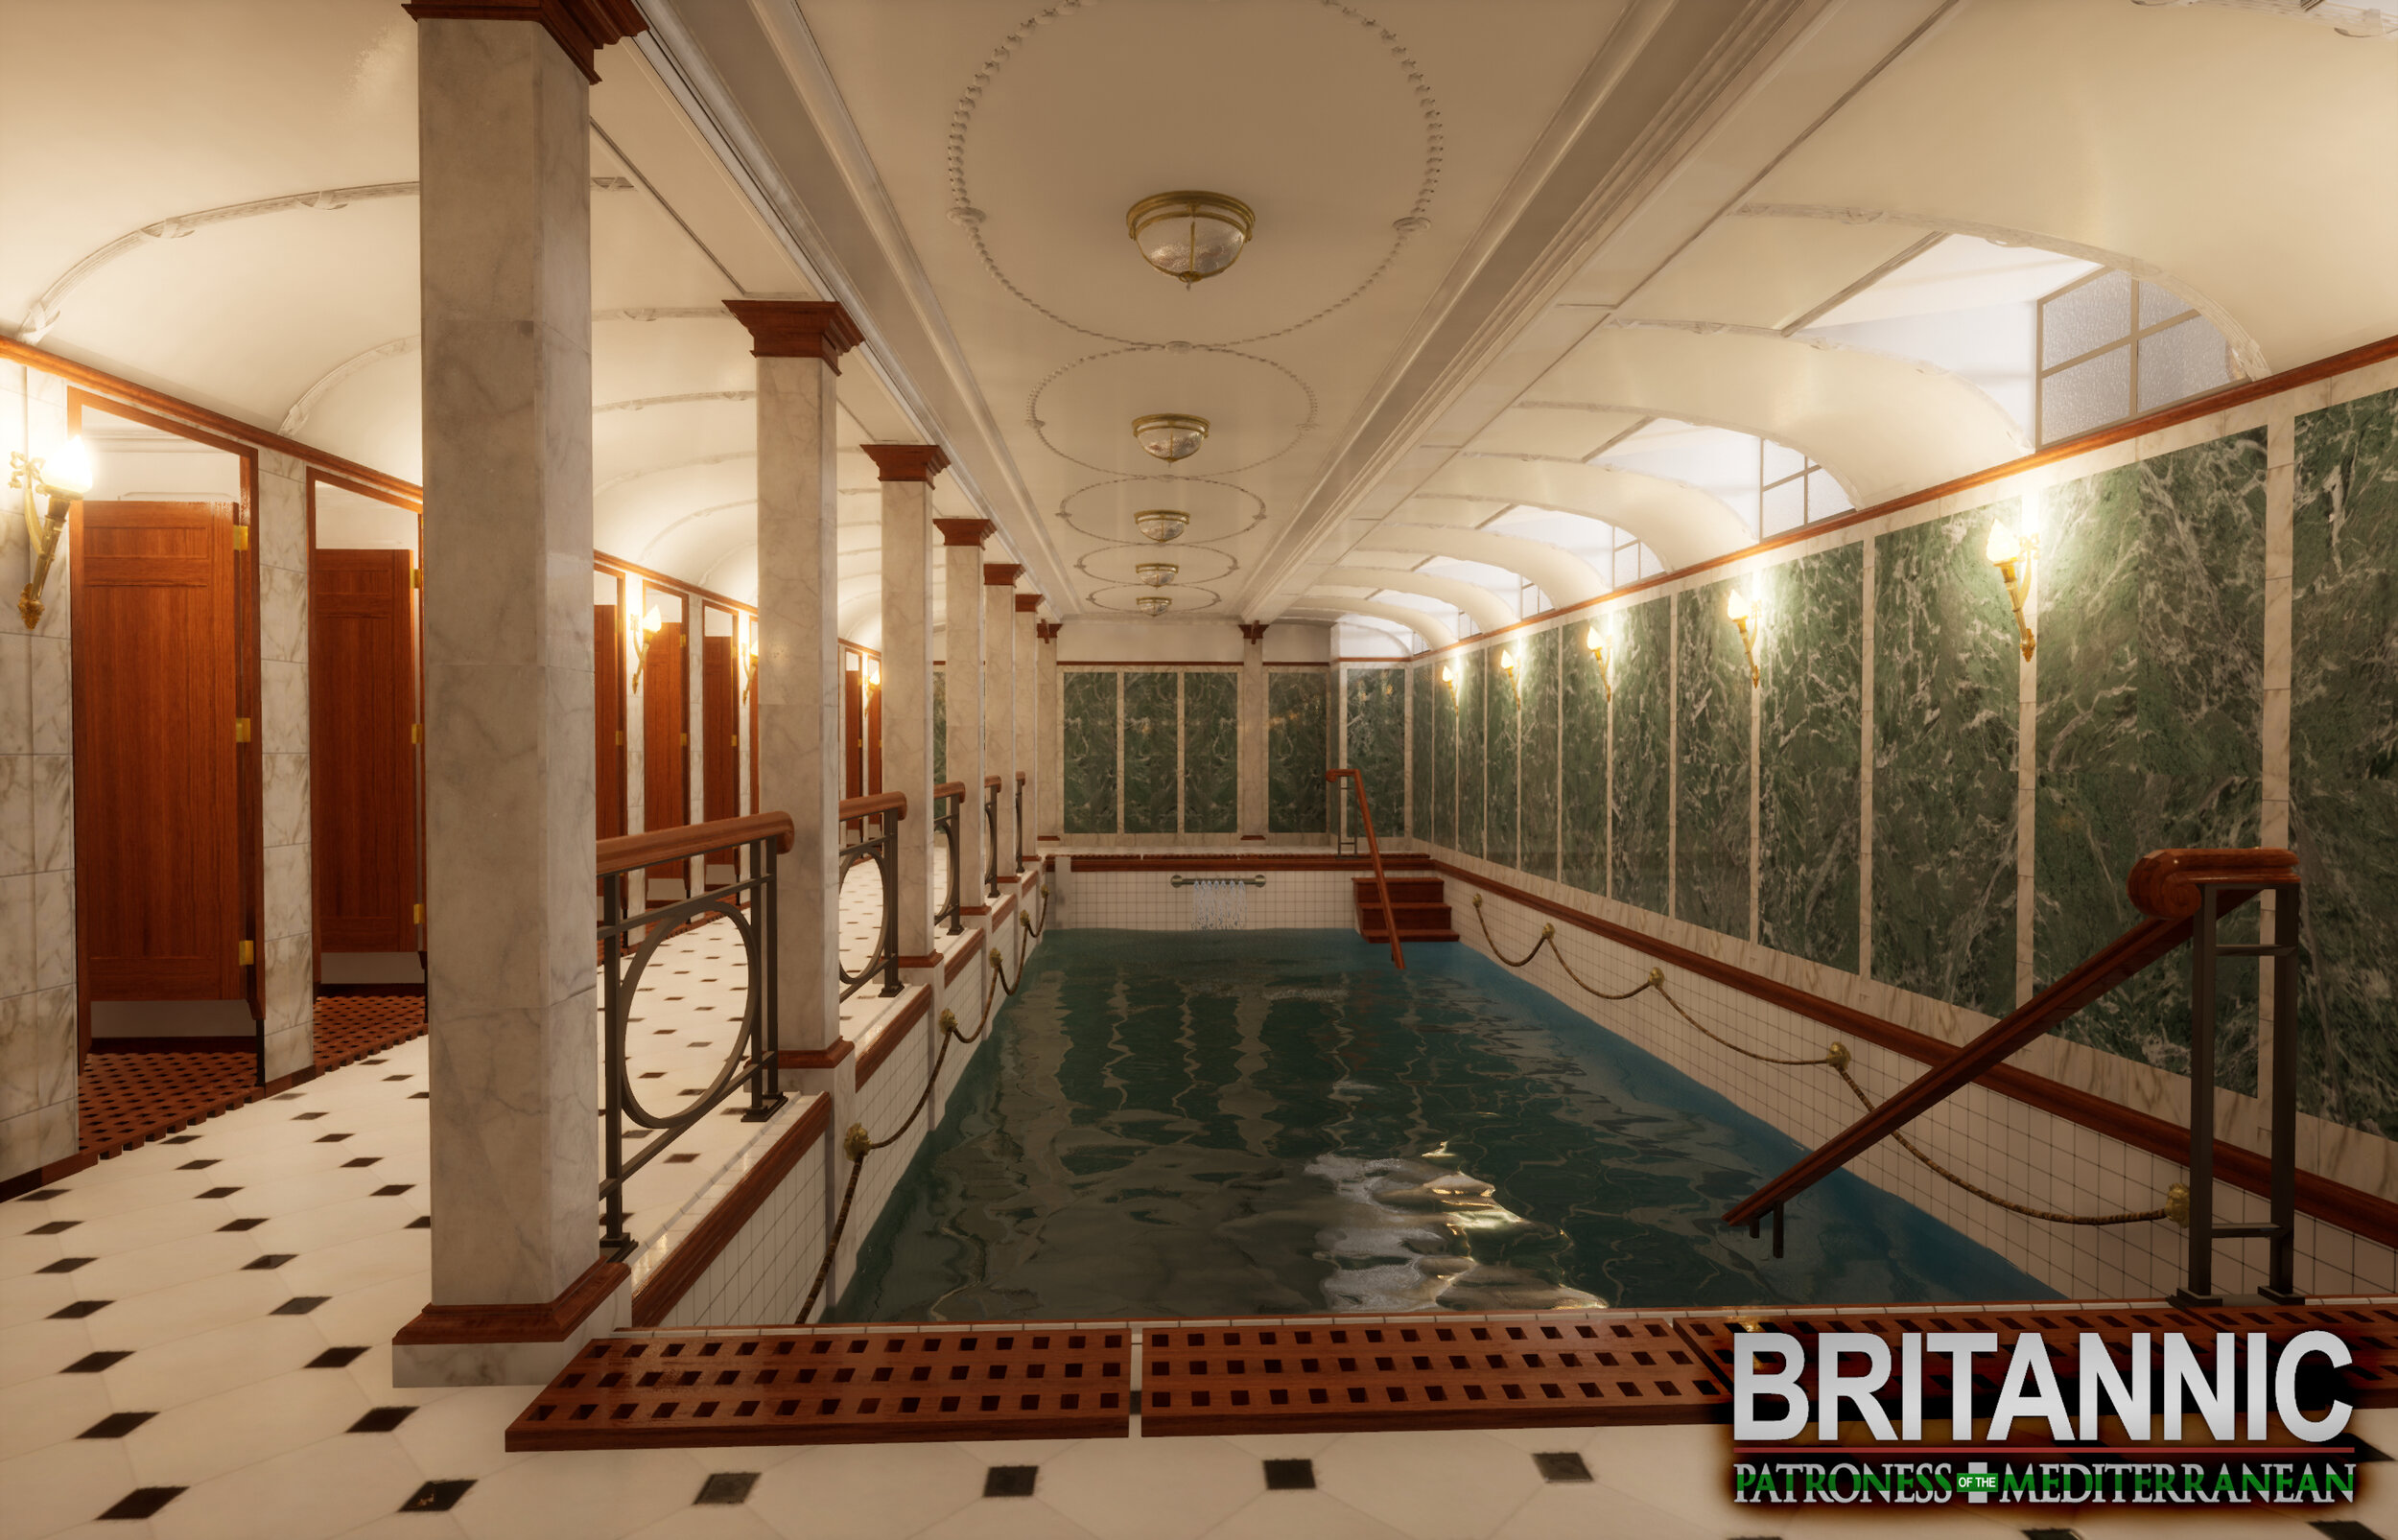 Britannic Patroness Of The Mediterranean Titanic Honor And Glory